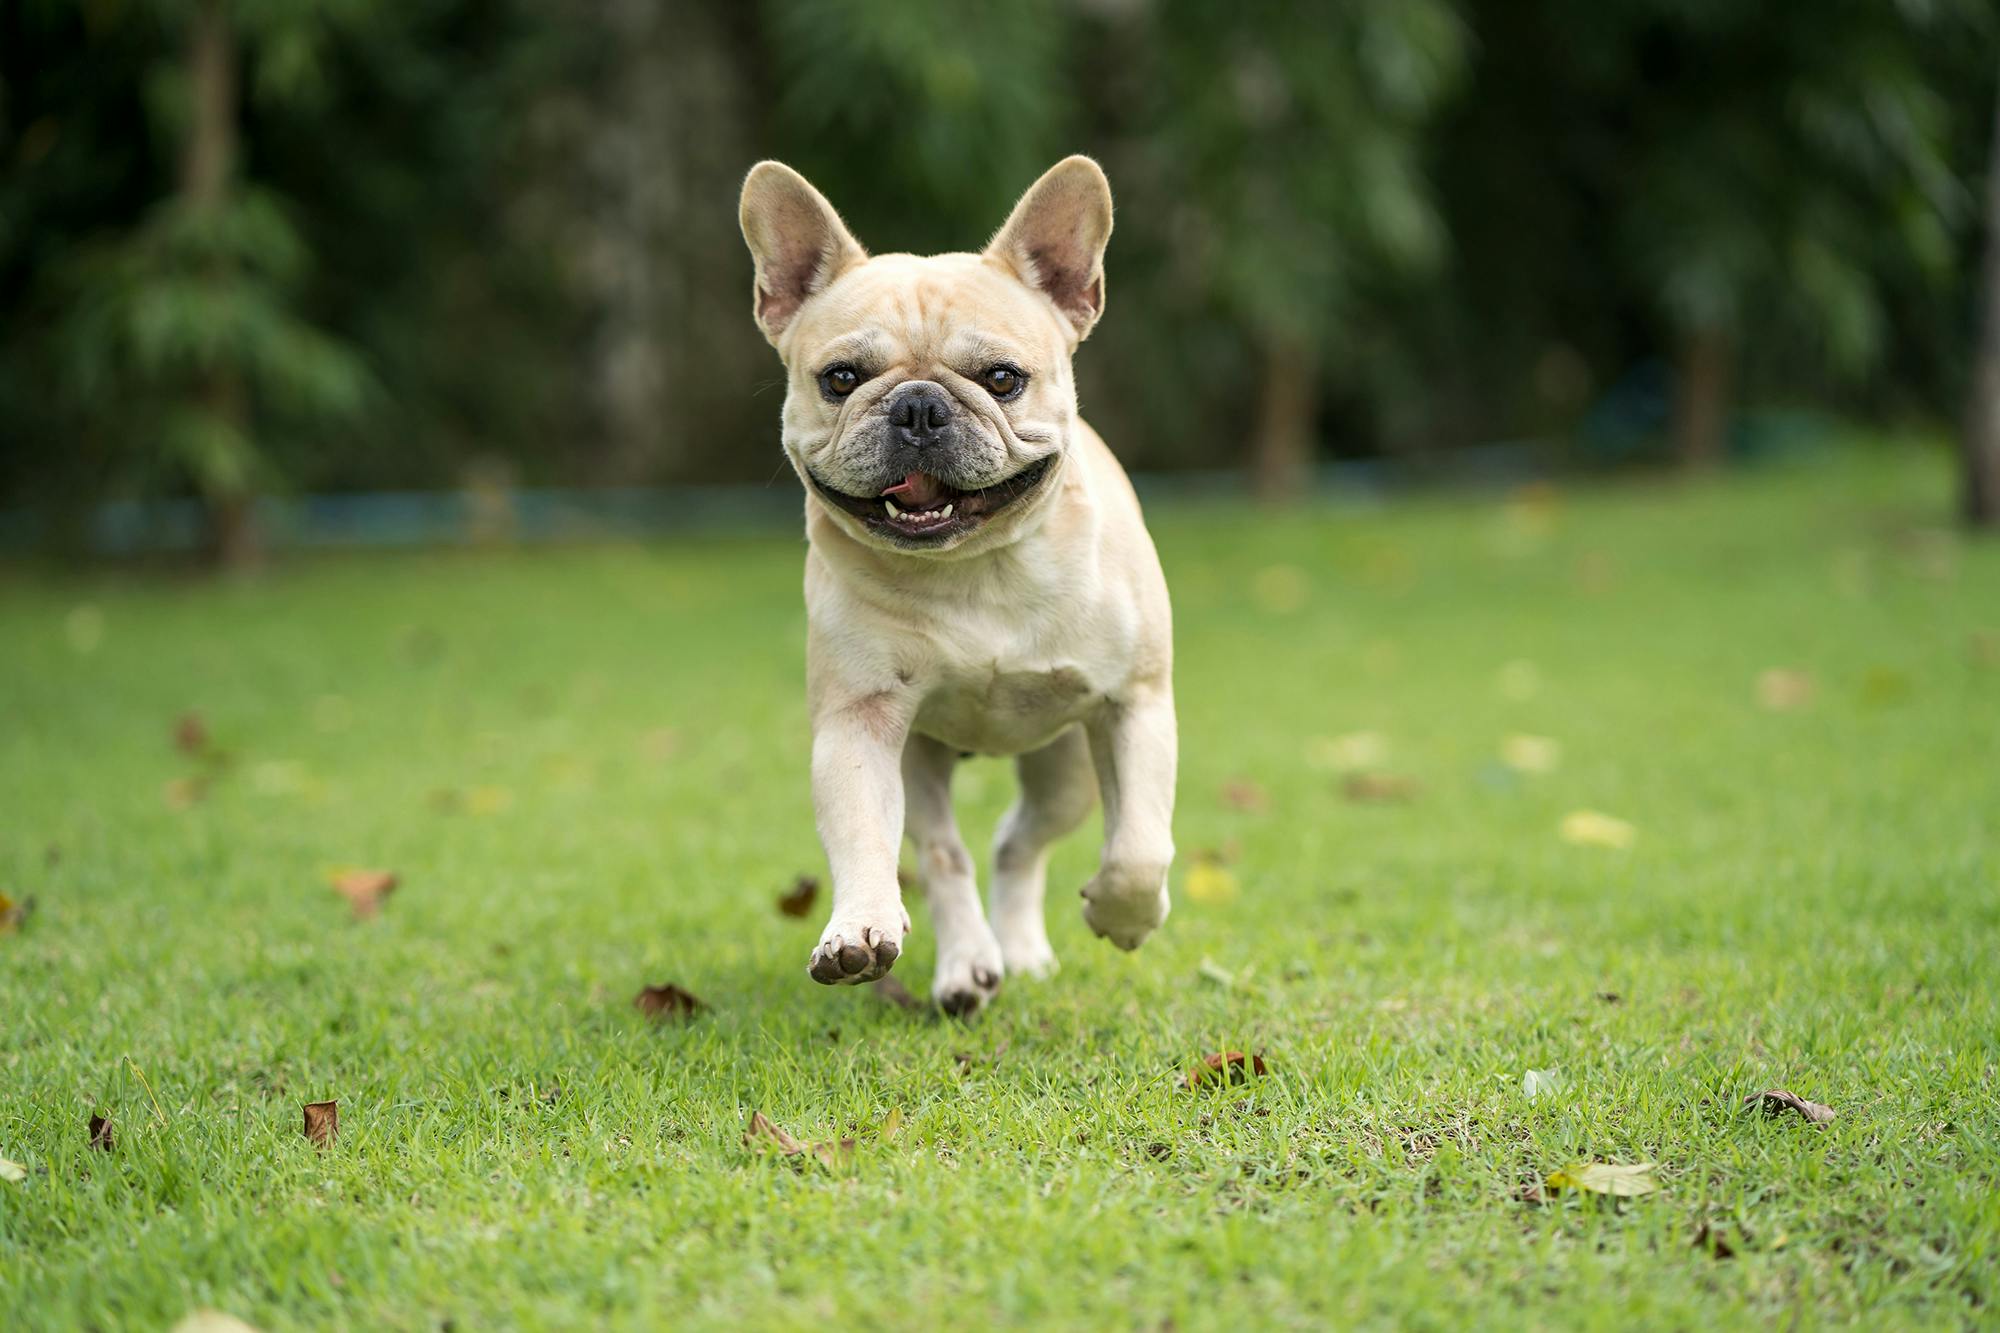 French Bulldog running in the grass.